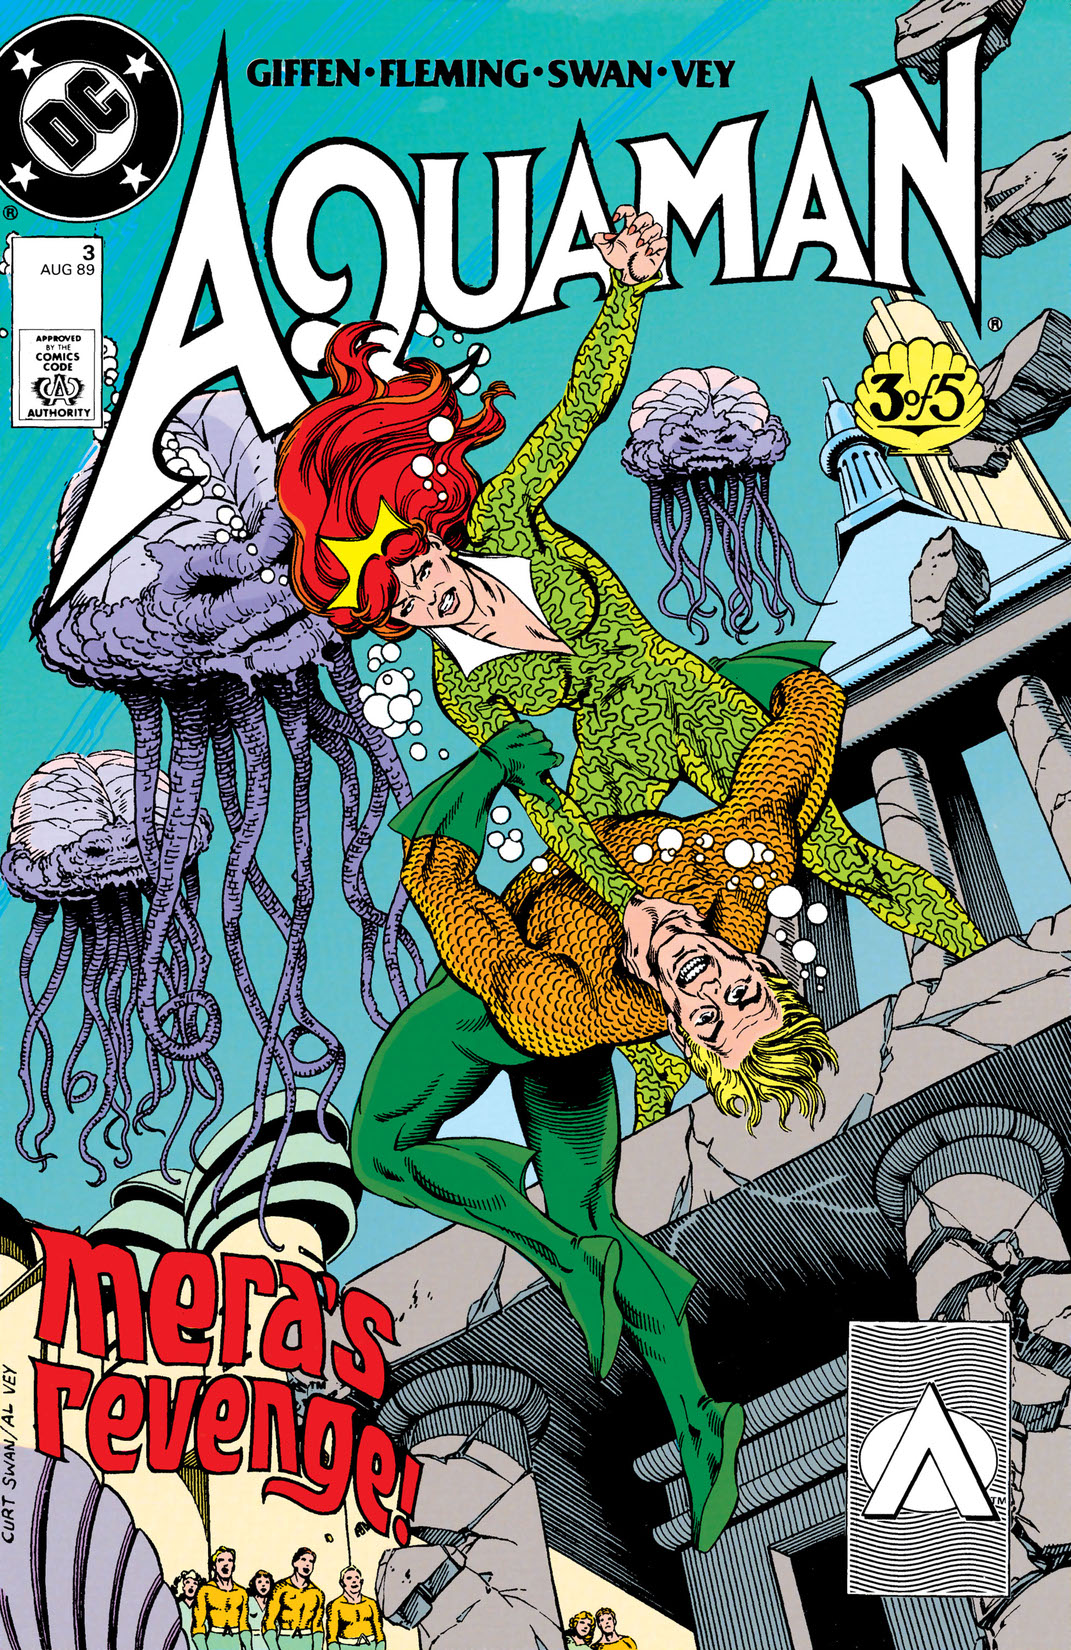 Aquaman (1989-1989) #3 preview images